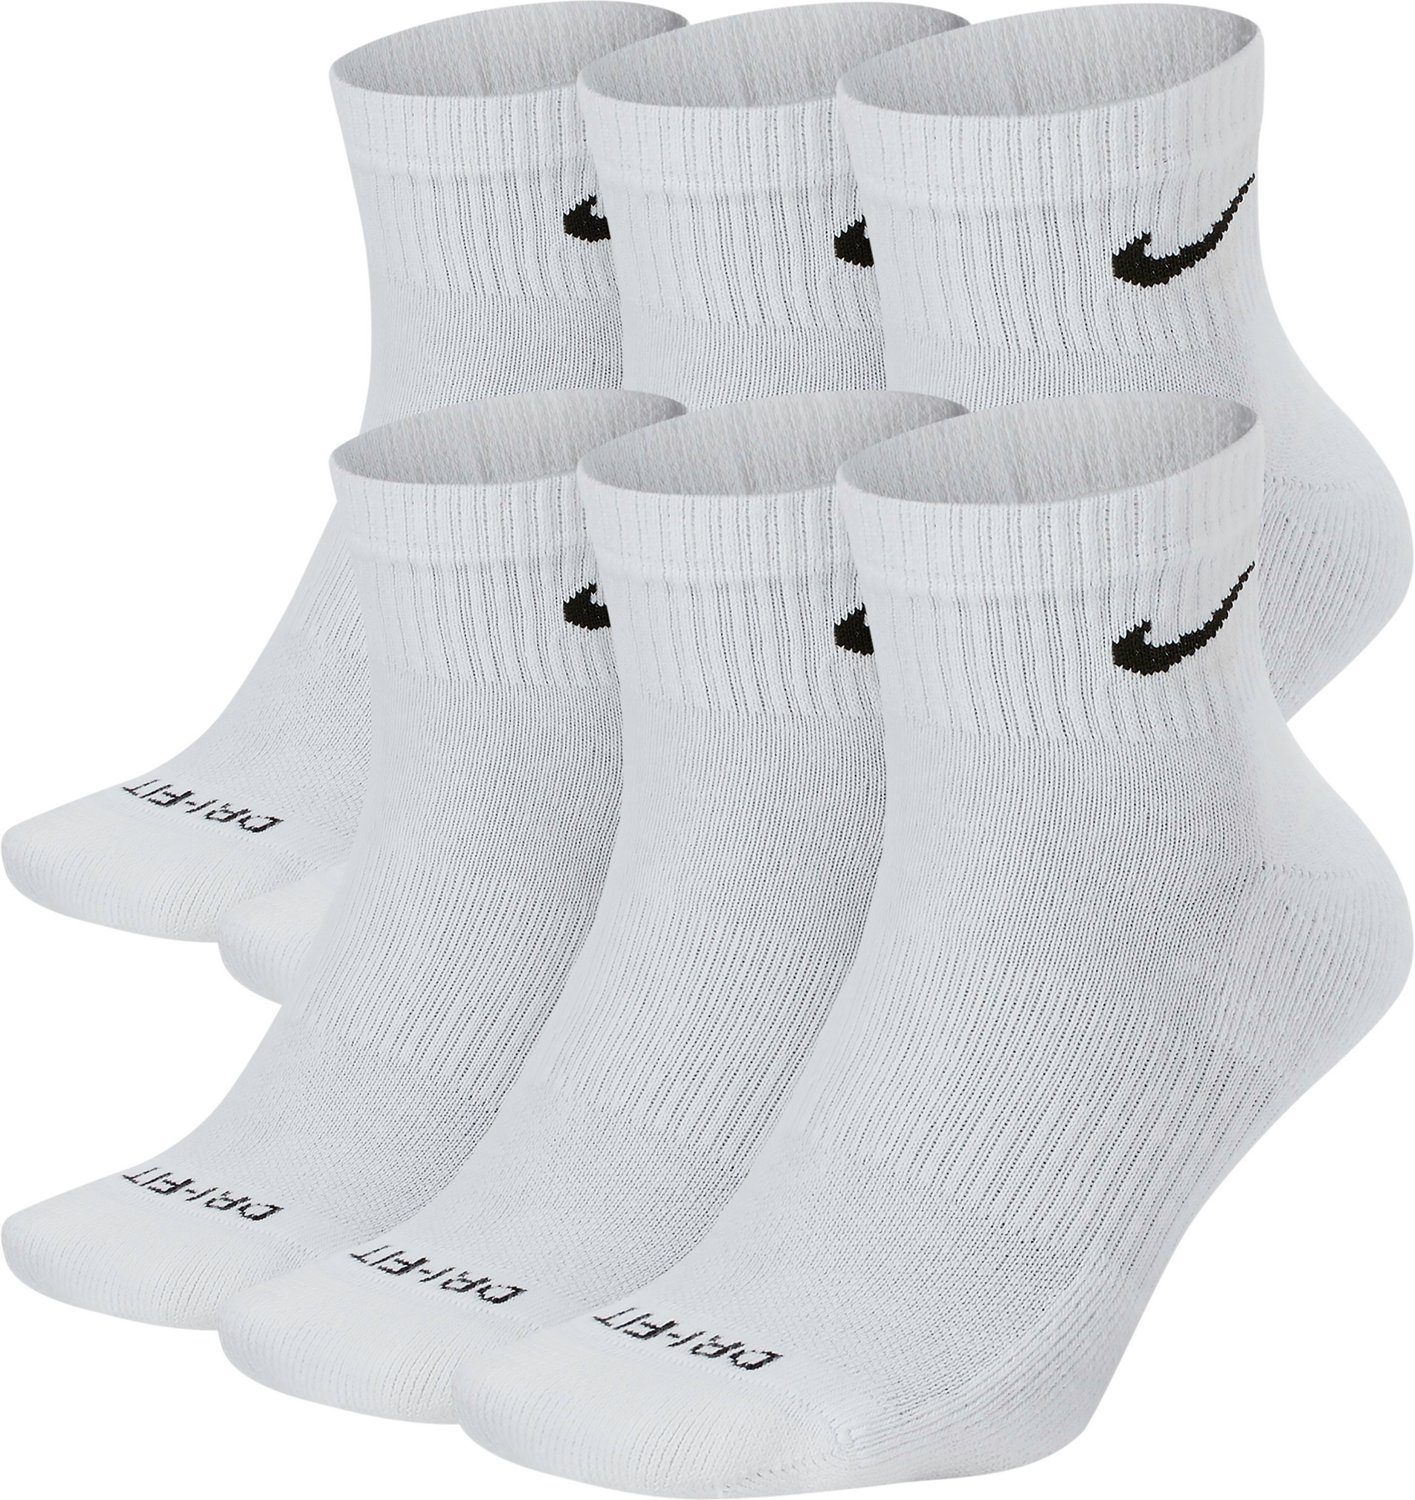 Nike Men's Everyday Plus Cushion Dri-FIT Training Ankle Socks 6